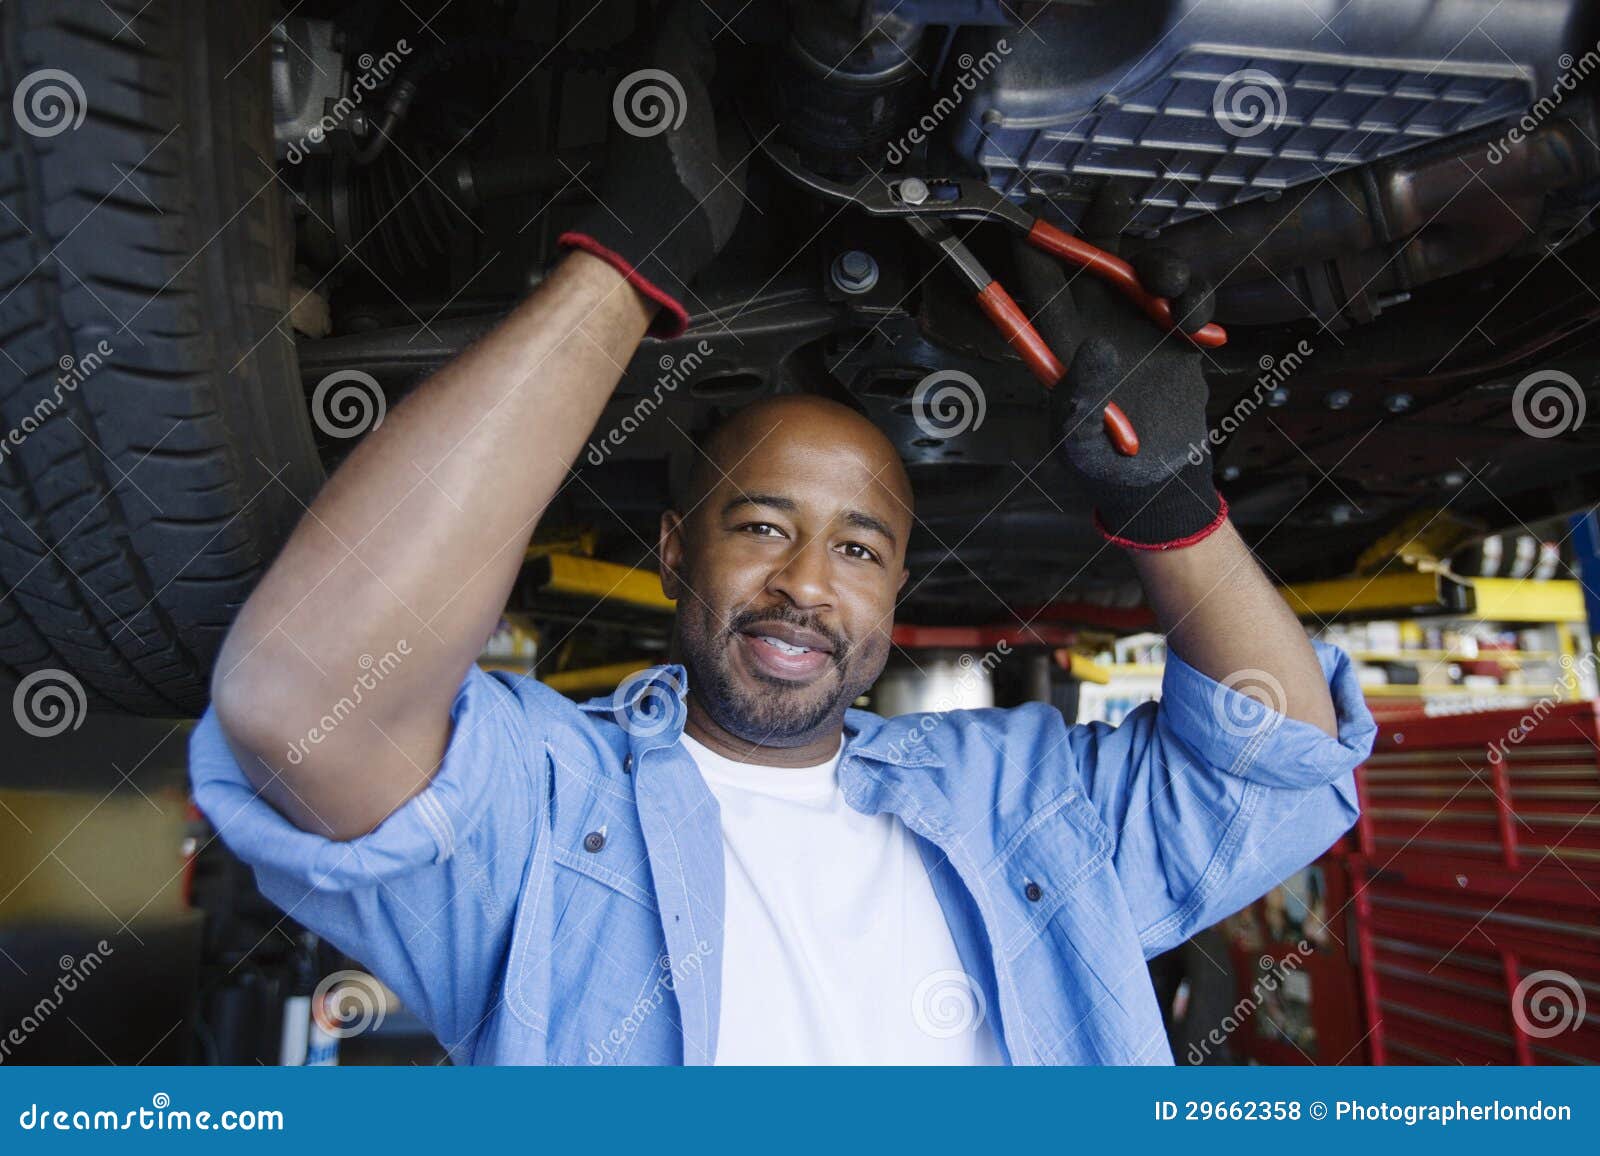 auto mechanic beneath a car